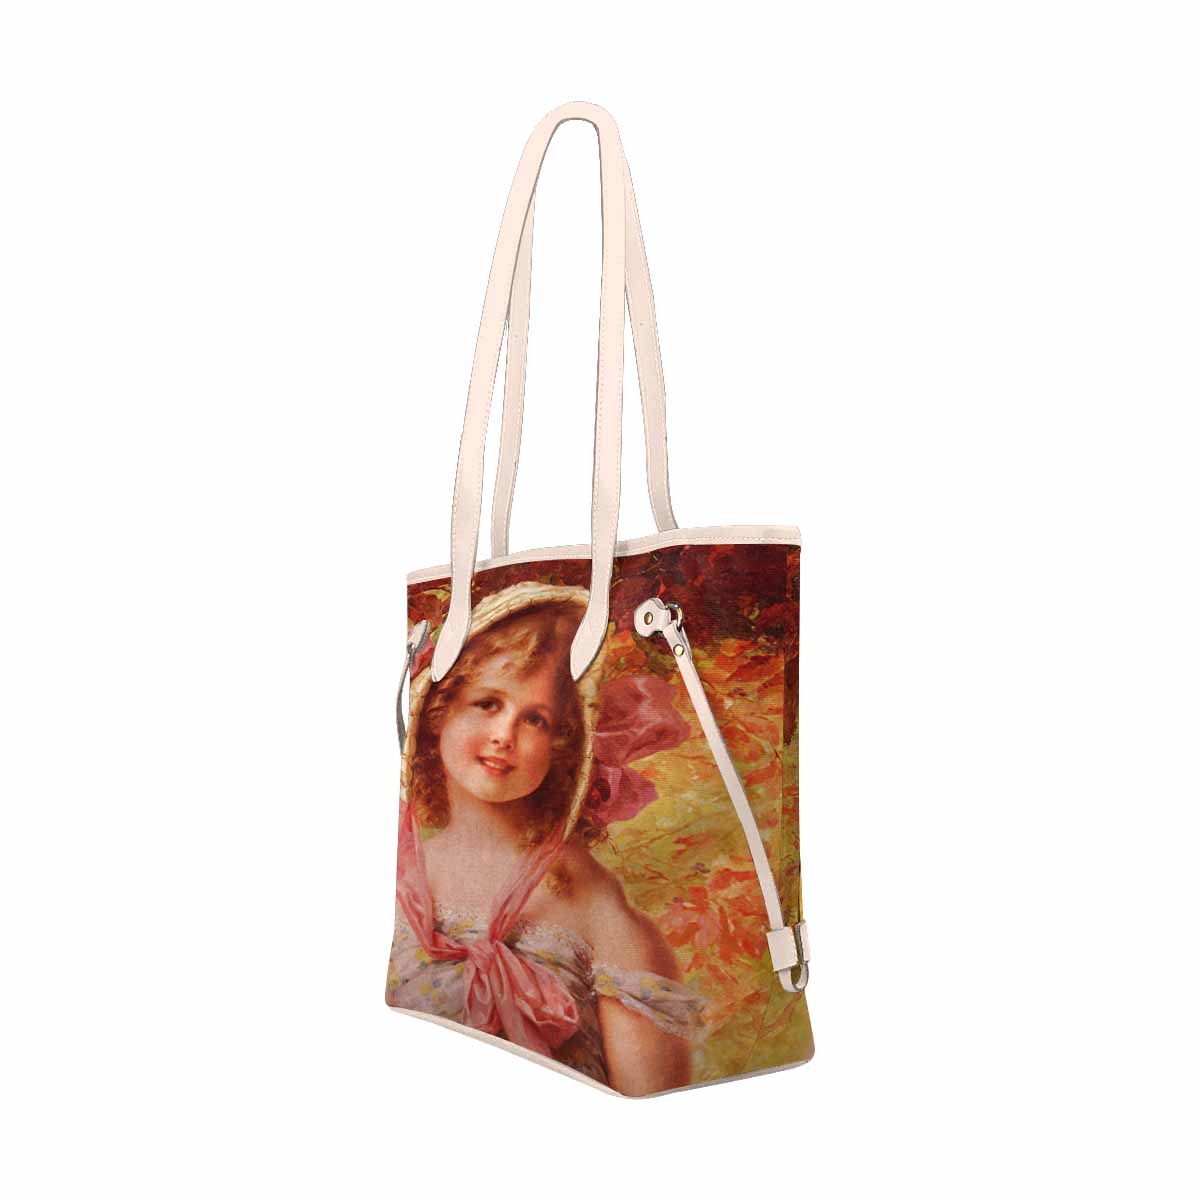 Victorian Girl Design Handbag, Model 1695361, The Cherry Bonnet, BEIGE/TAN TRIM